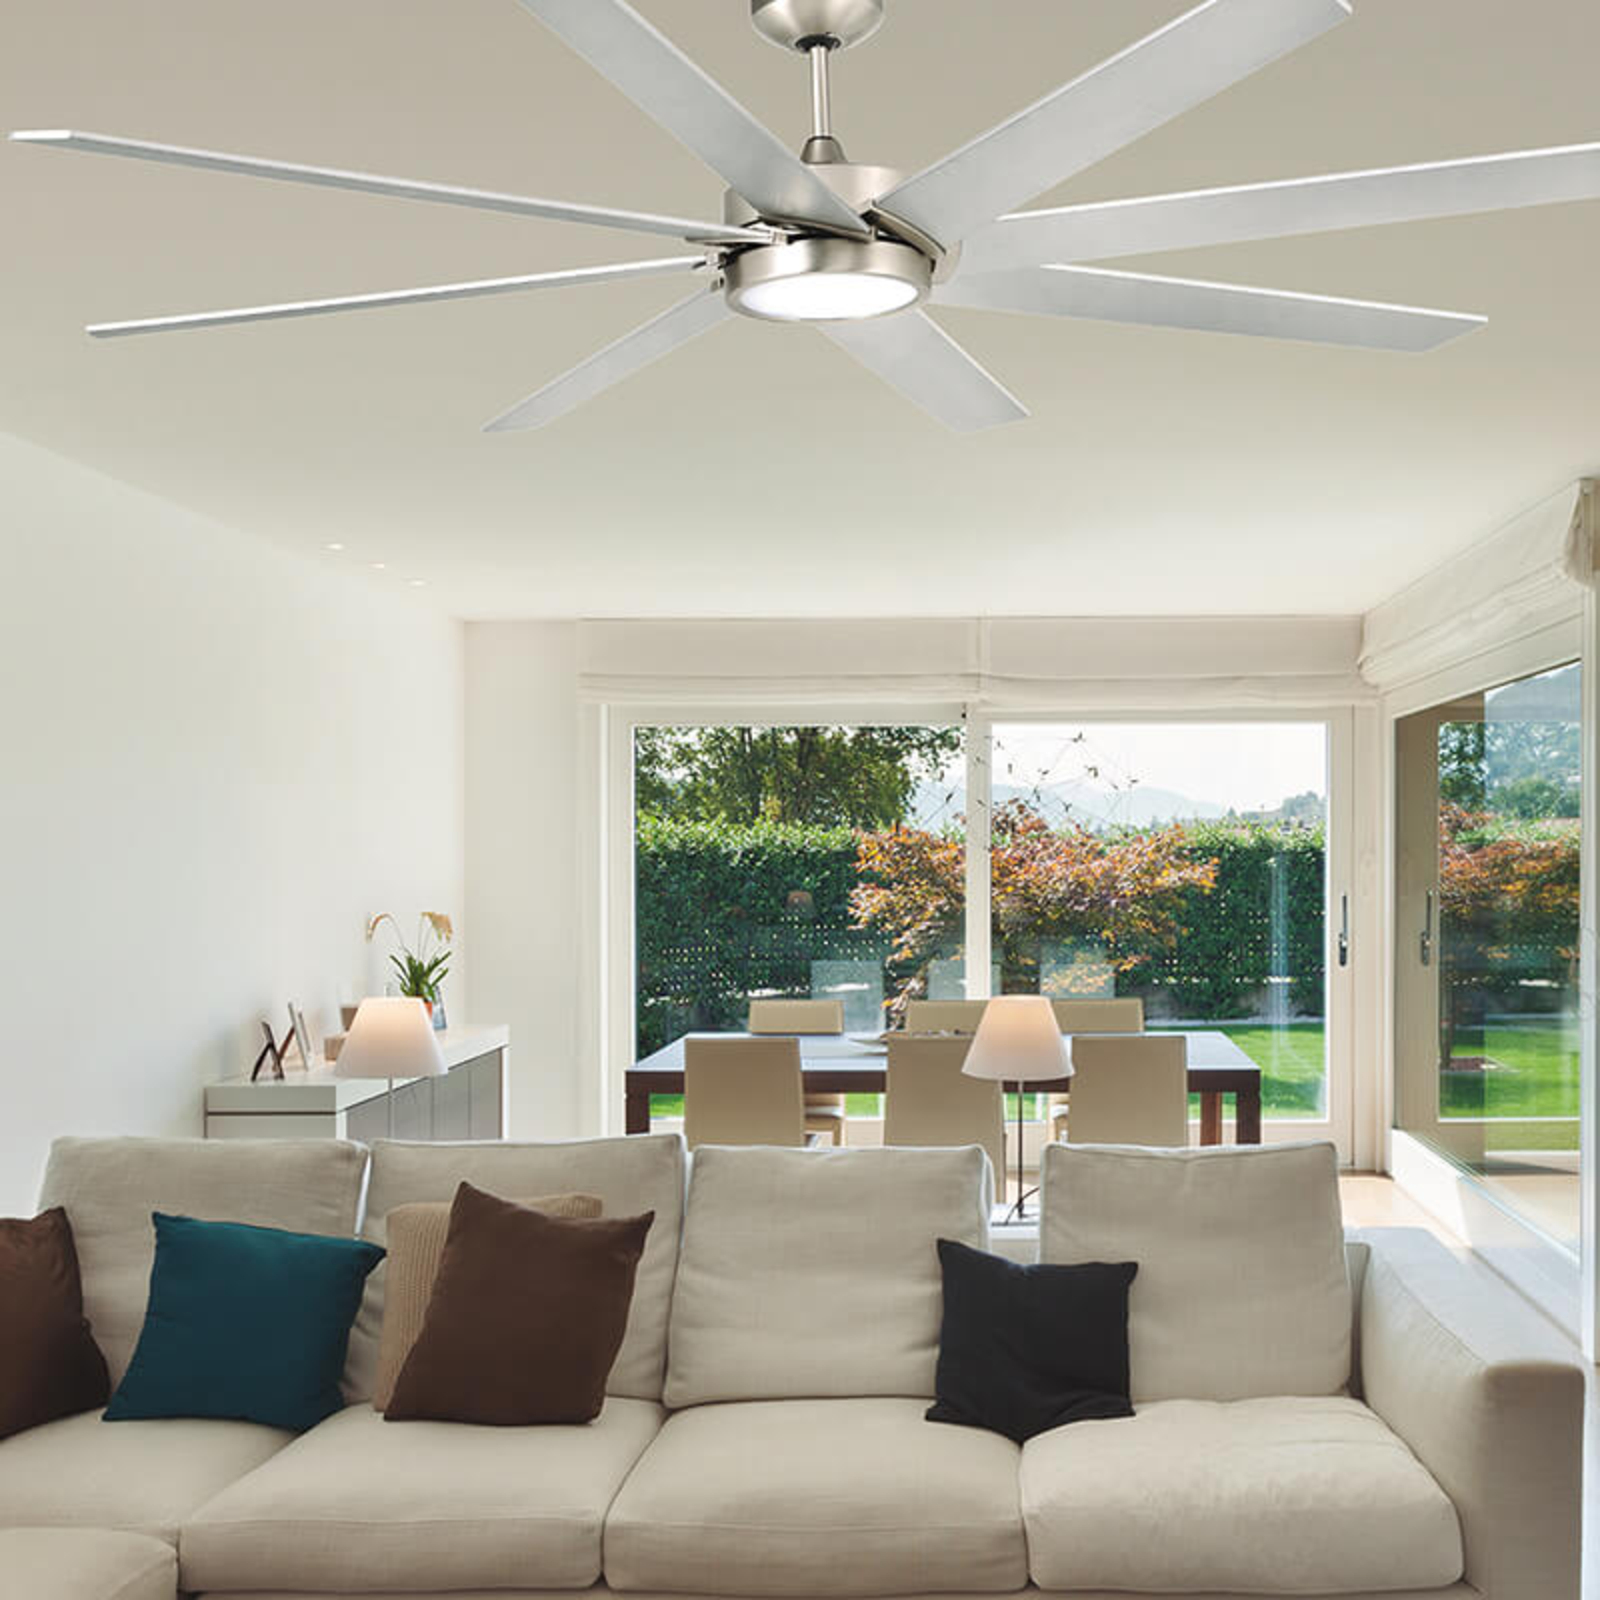 LED ceiling fan Century matt nickel grey